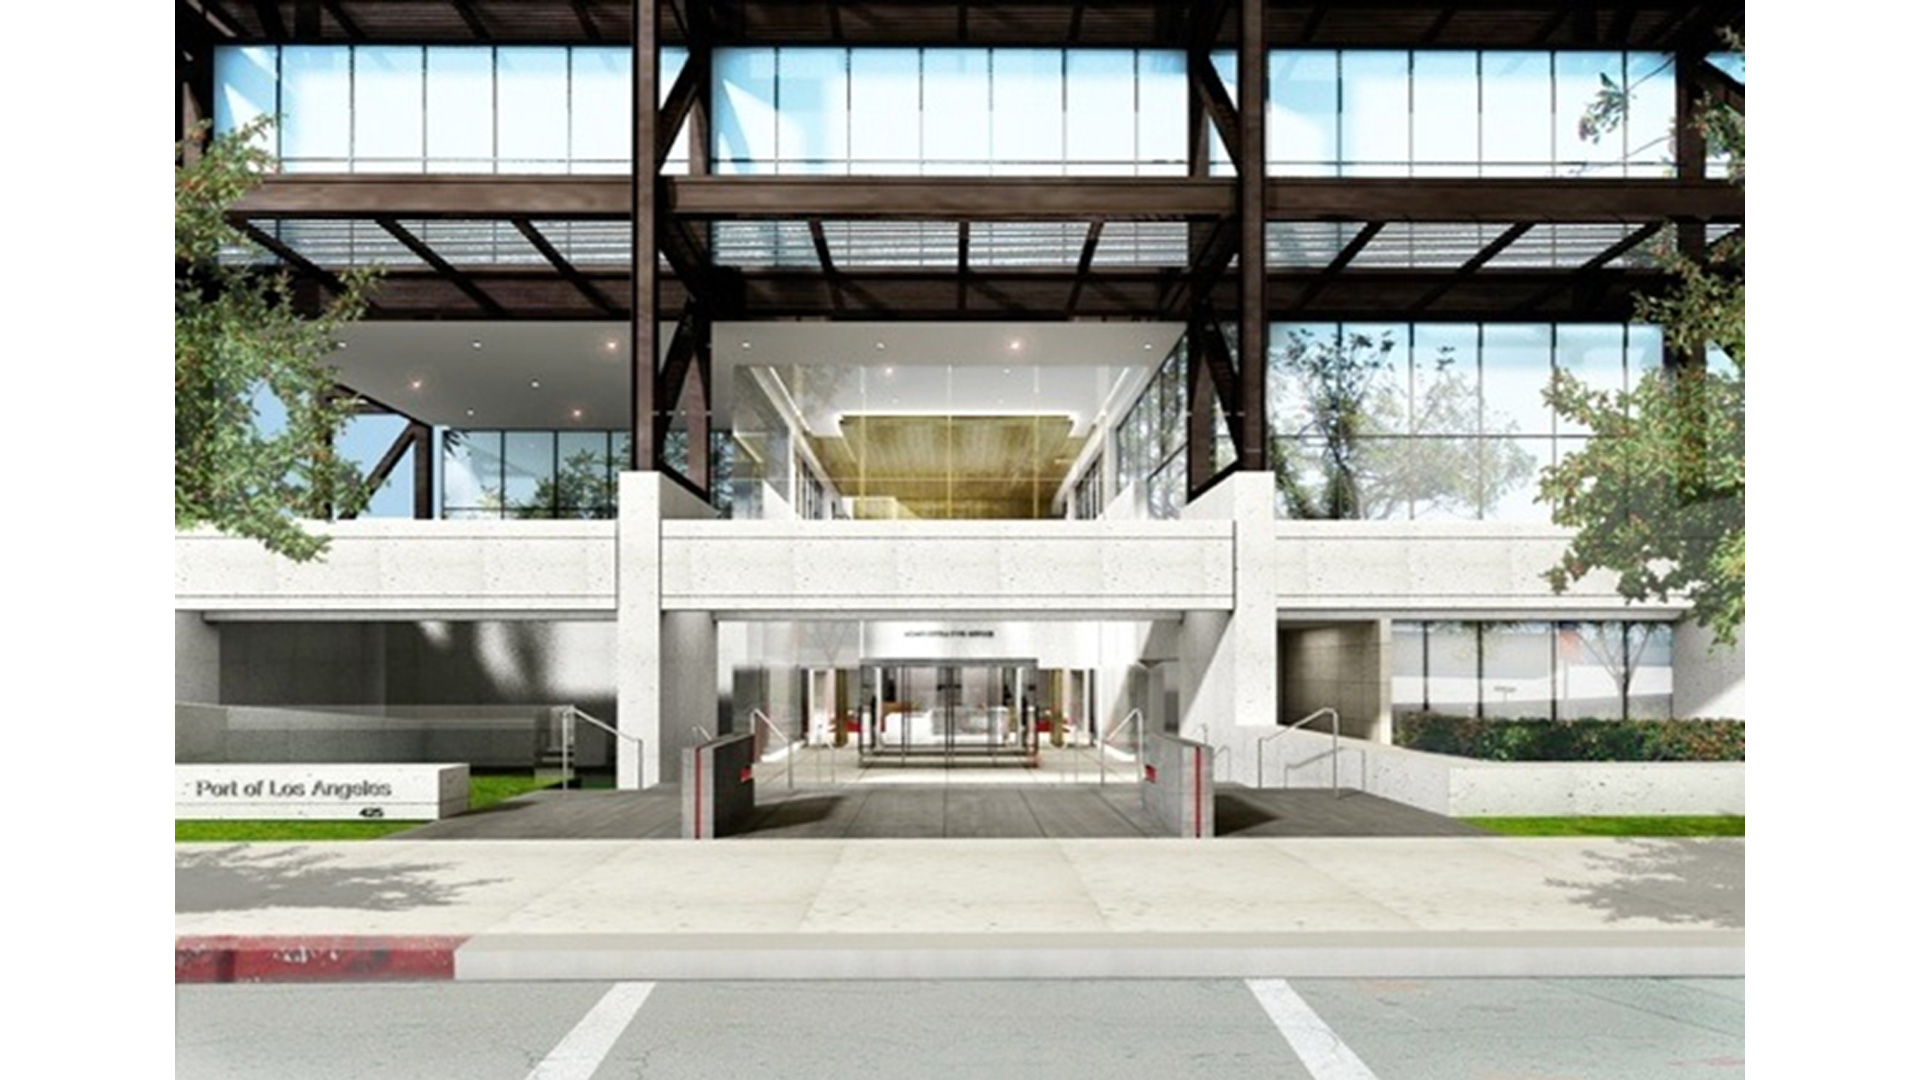 Port of Los Angeles Headquarters Building - image